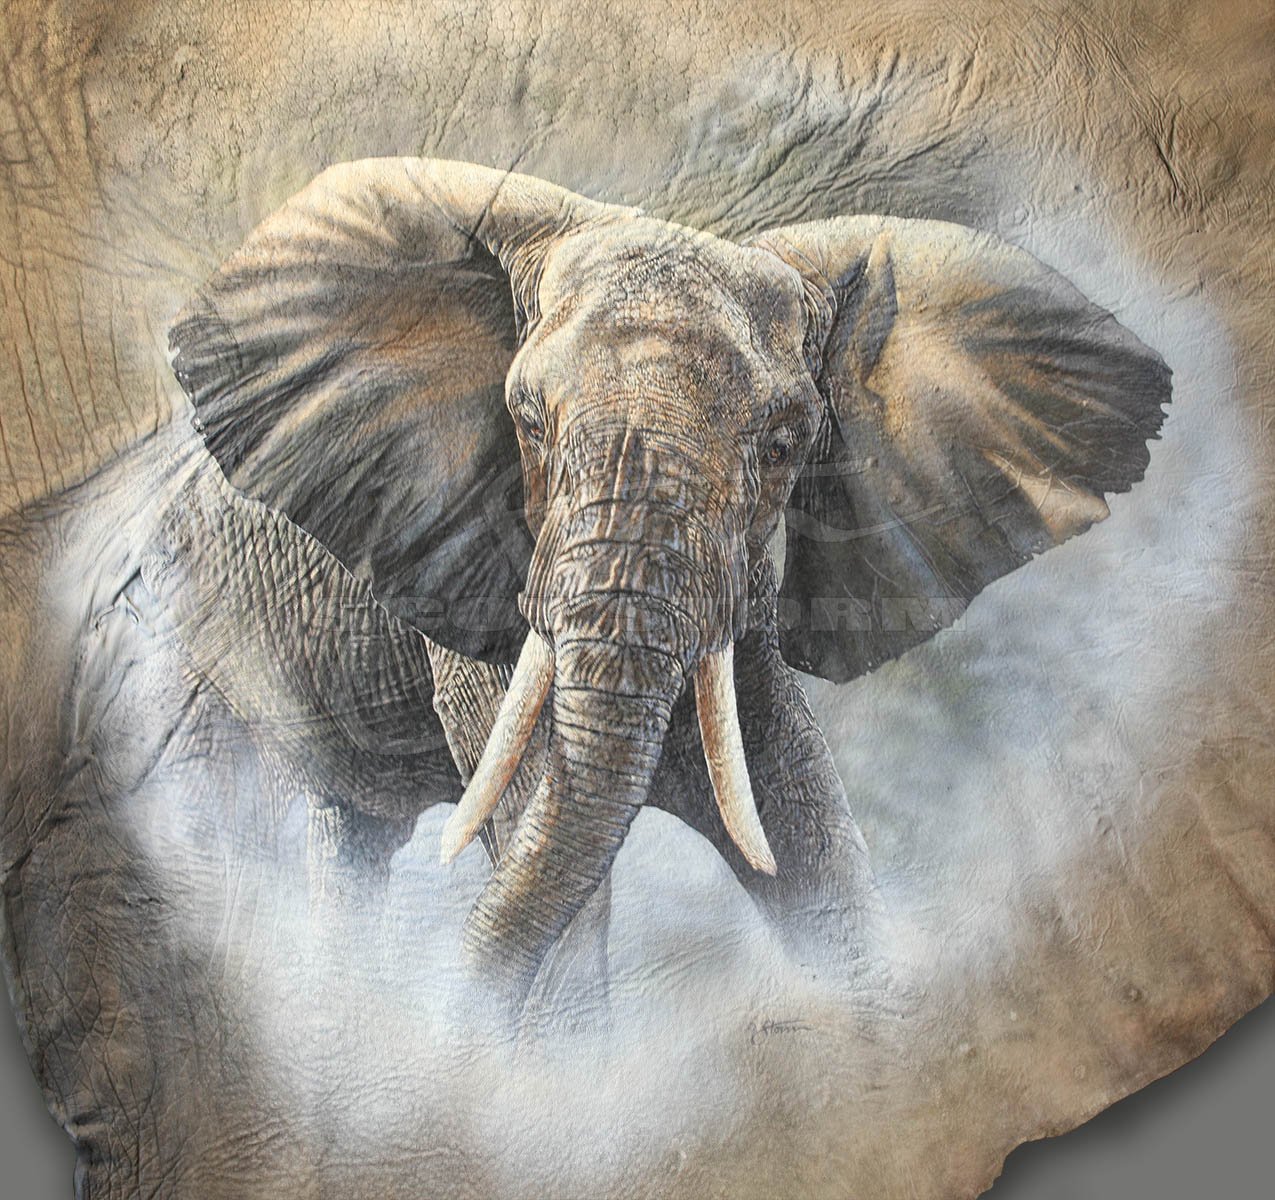 Elephant ear+elephant+african+safari+Scot Storm+wildlife+art+prints+original+painting.jpg